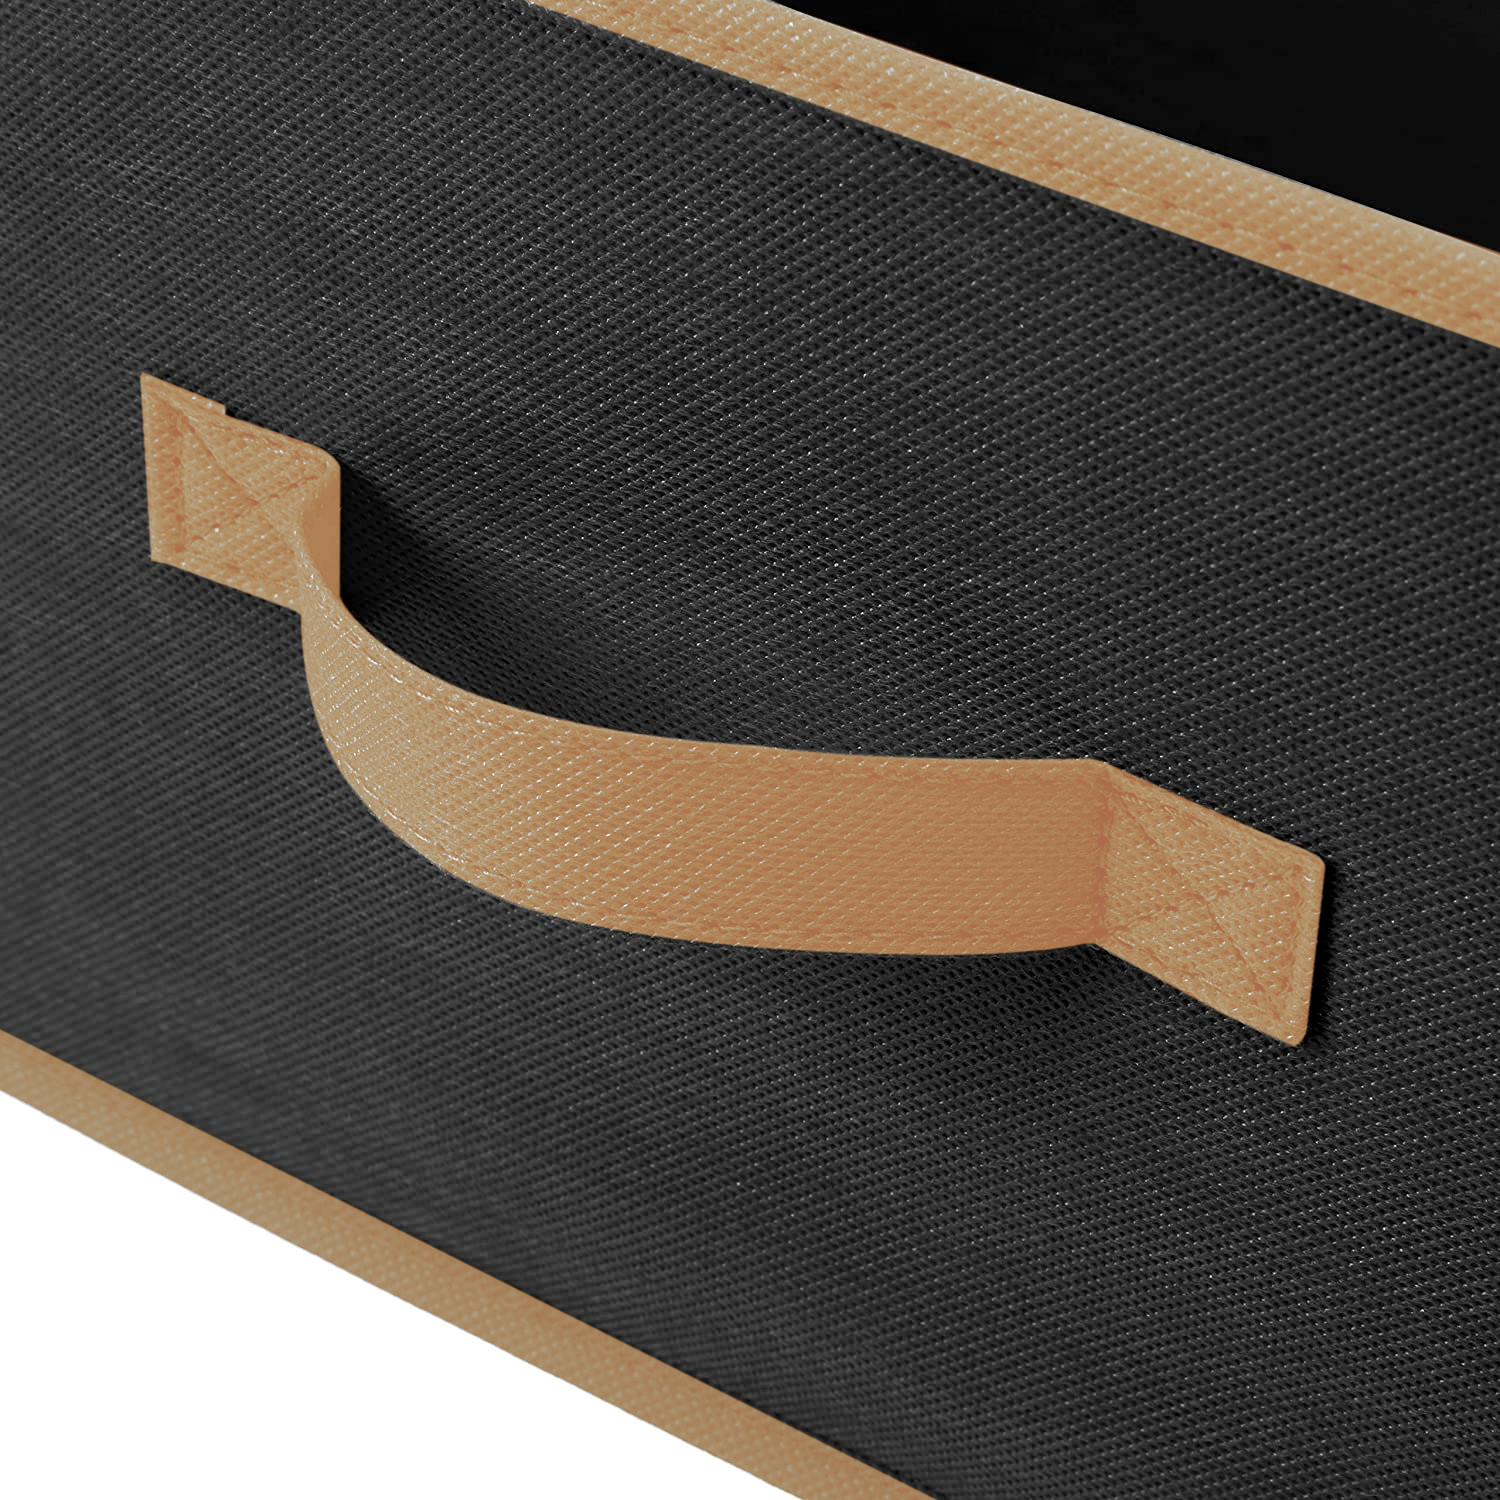 Kuber Industries Non-Woven Rectangular Flodable Cloth Storage Box,(Black & Brown)